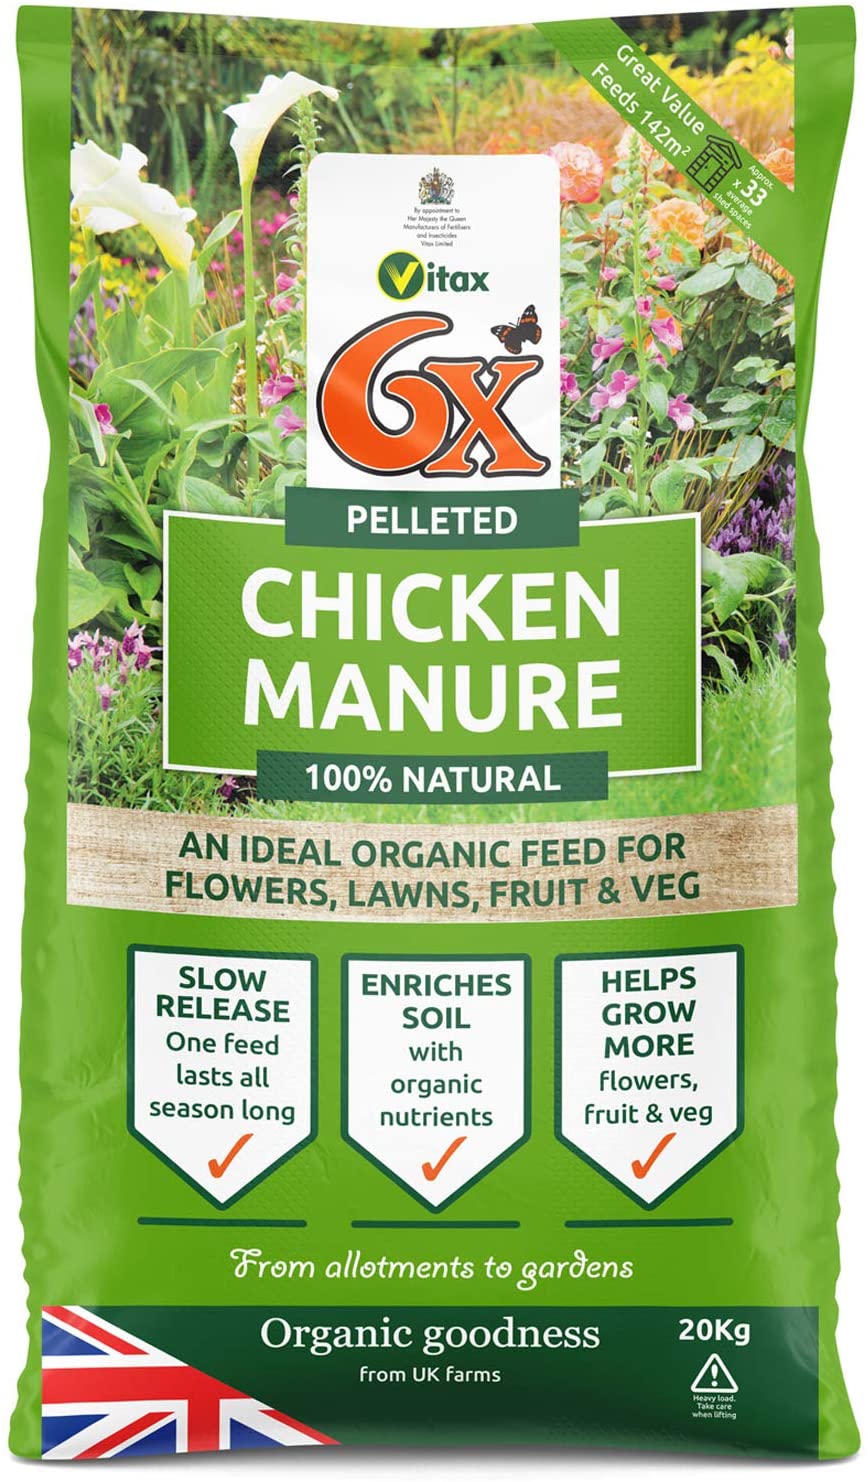 Vitax-6X-Pelleted-Chicken-Poultry-Manure-20kg-Bag